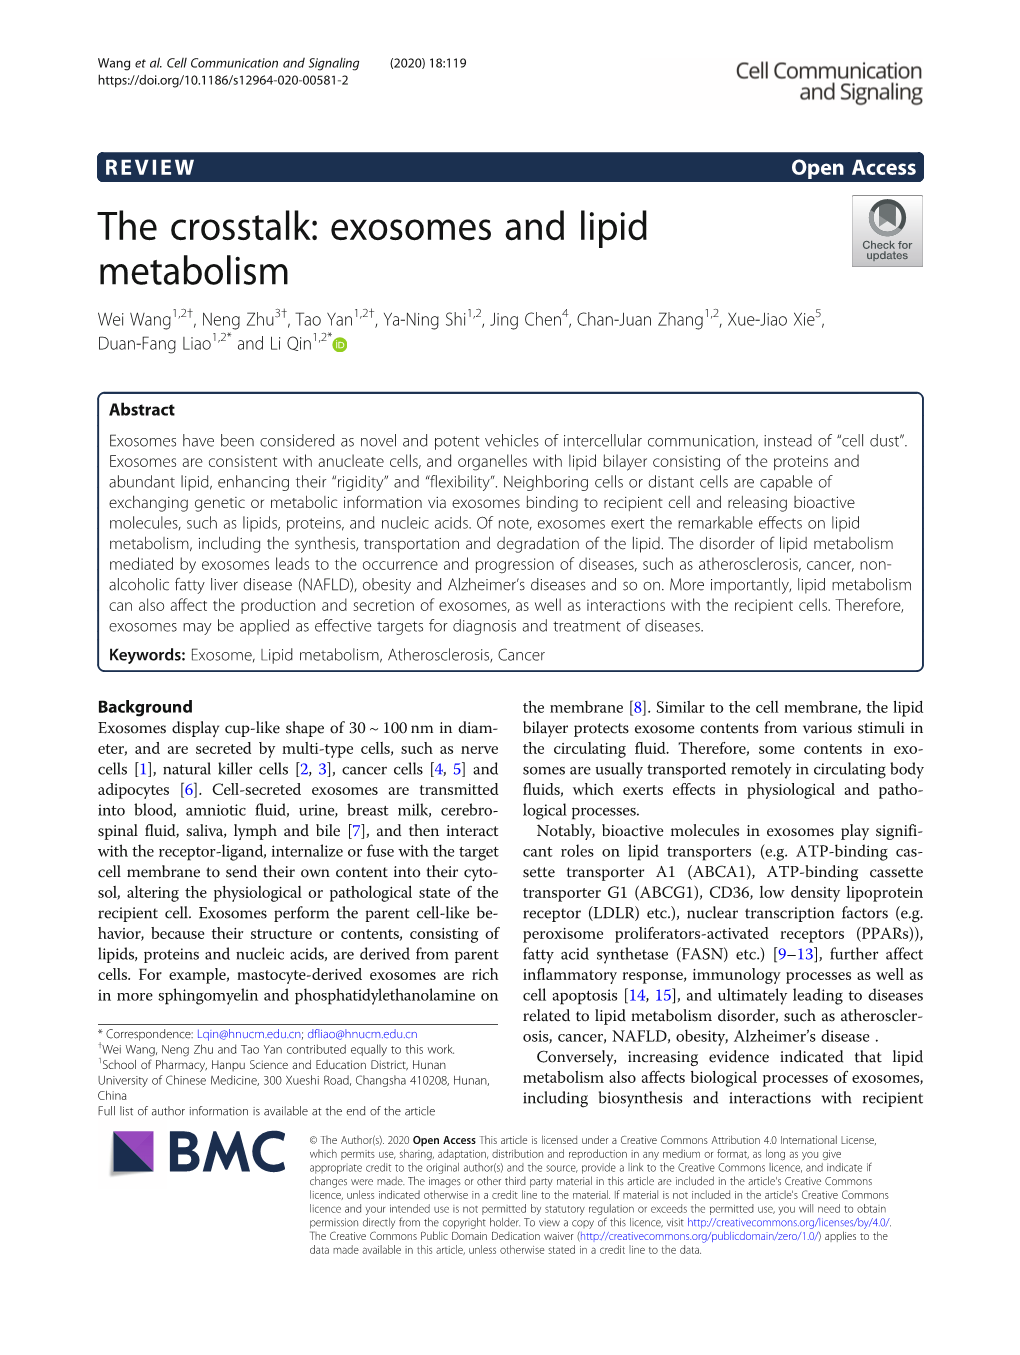 The Crosstalk: Exosomes and Lipid Metabolism